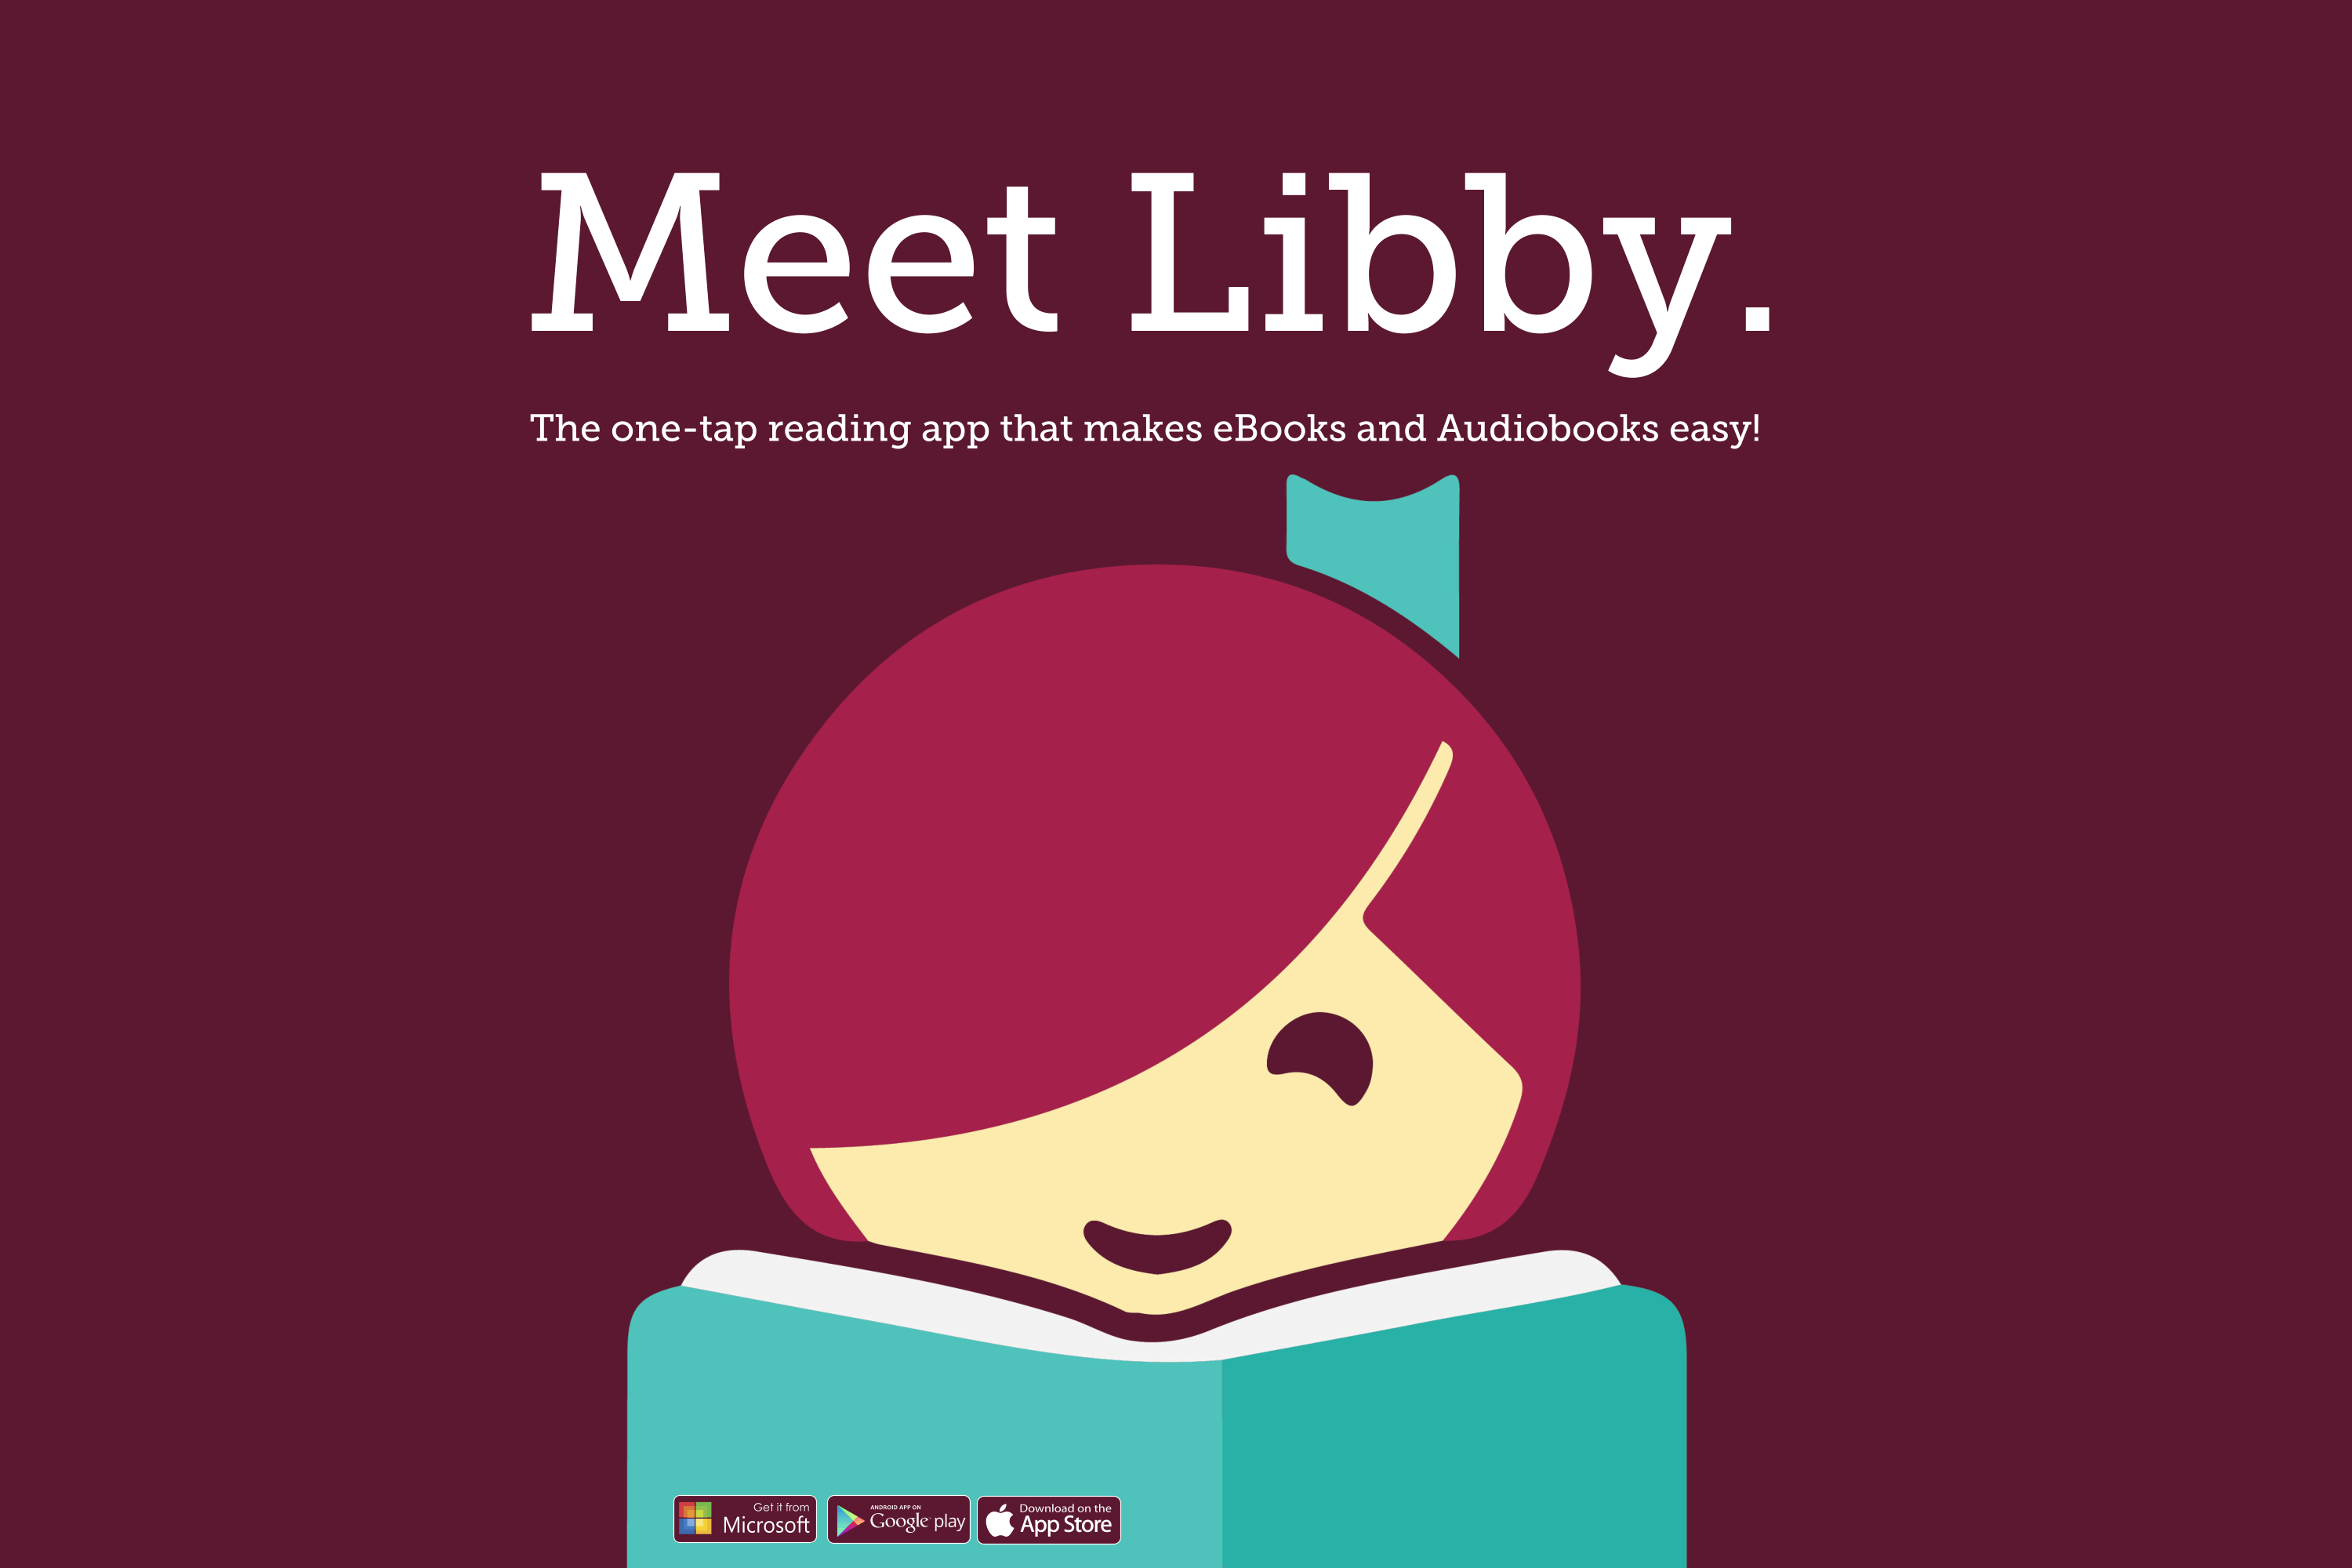 Meet Libby.